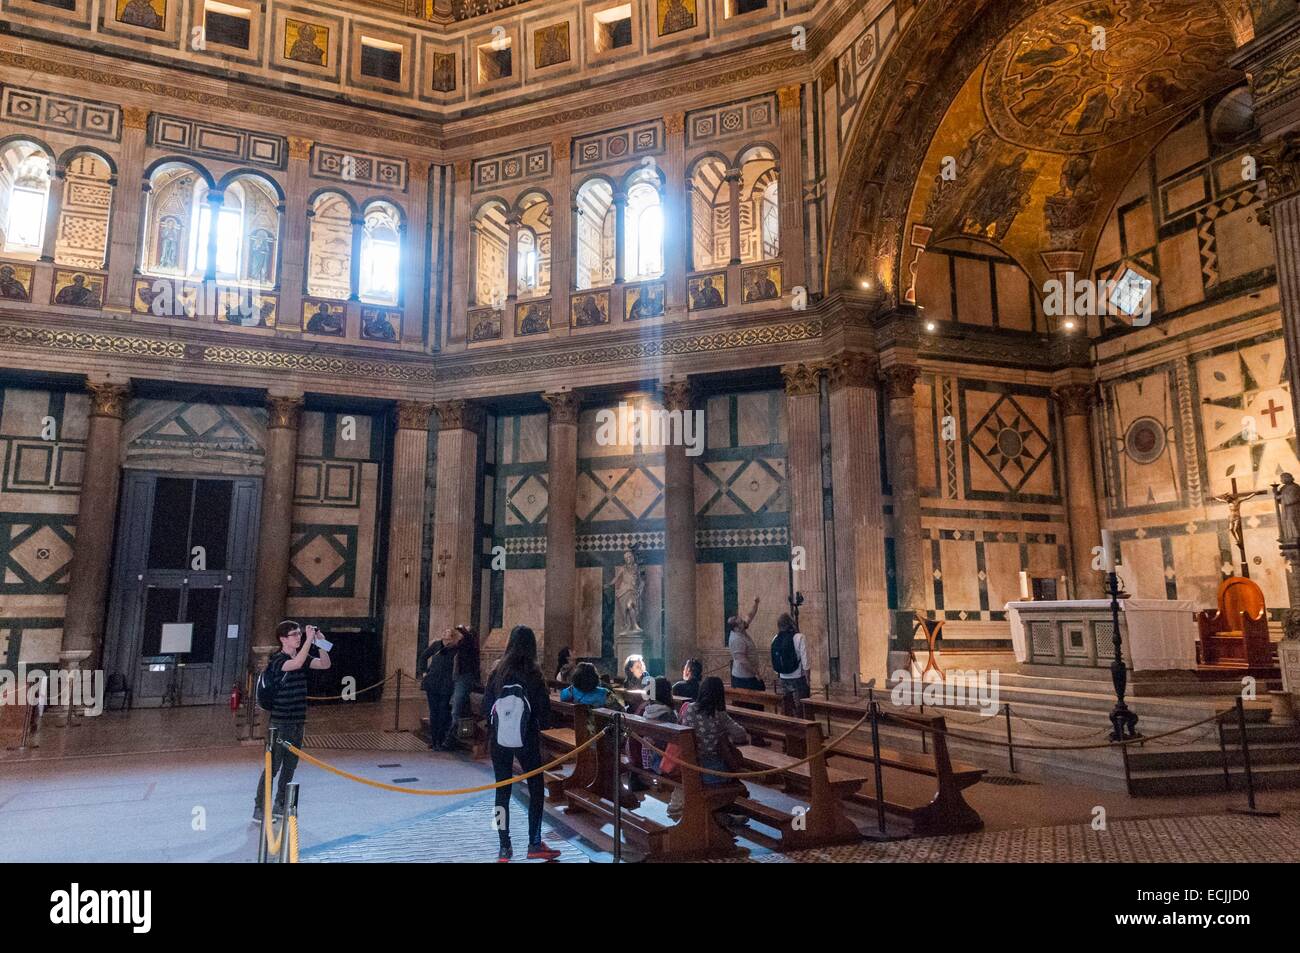 Italy, Tuscany, Florence, Piazza della Signoria, UNESCO World Heritage Site, Mosaic ceiling of dome of the Battistero (Baptistery) Stock Photo